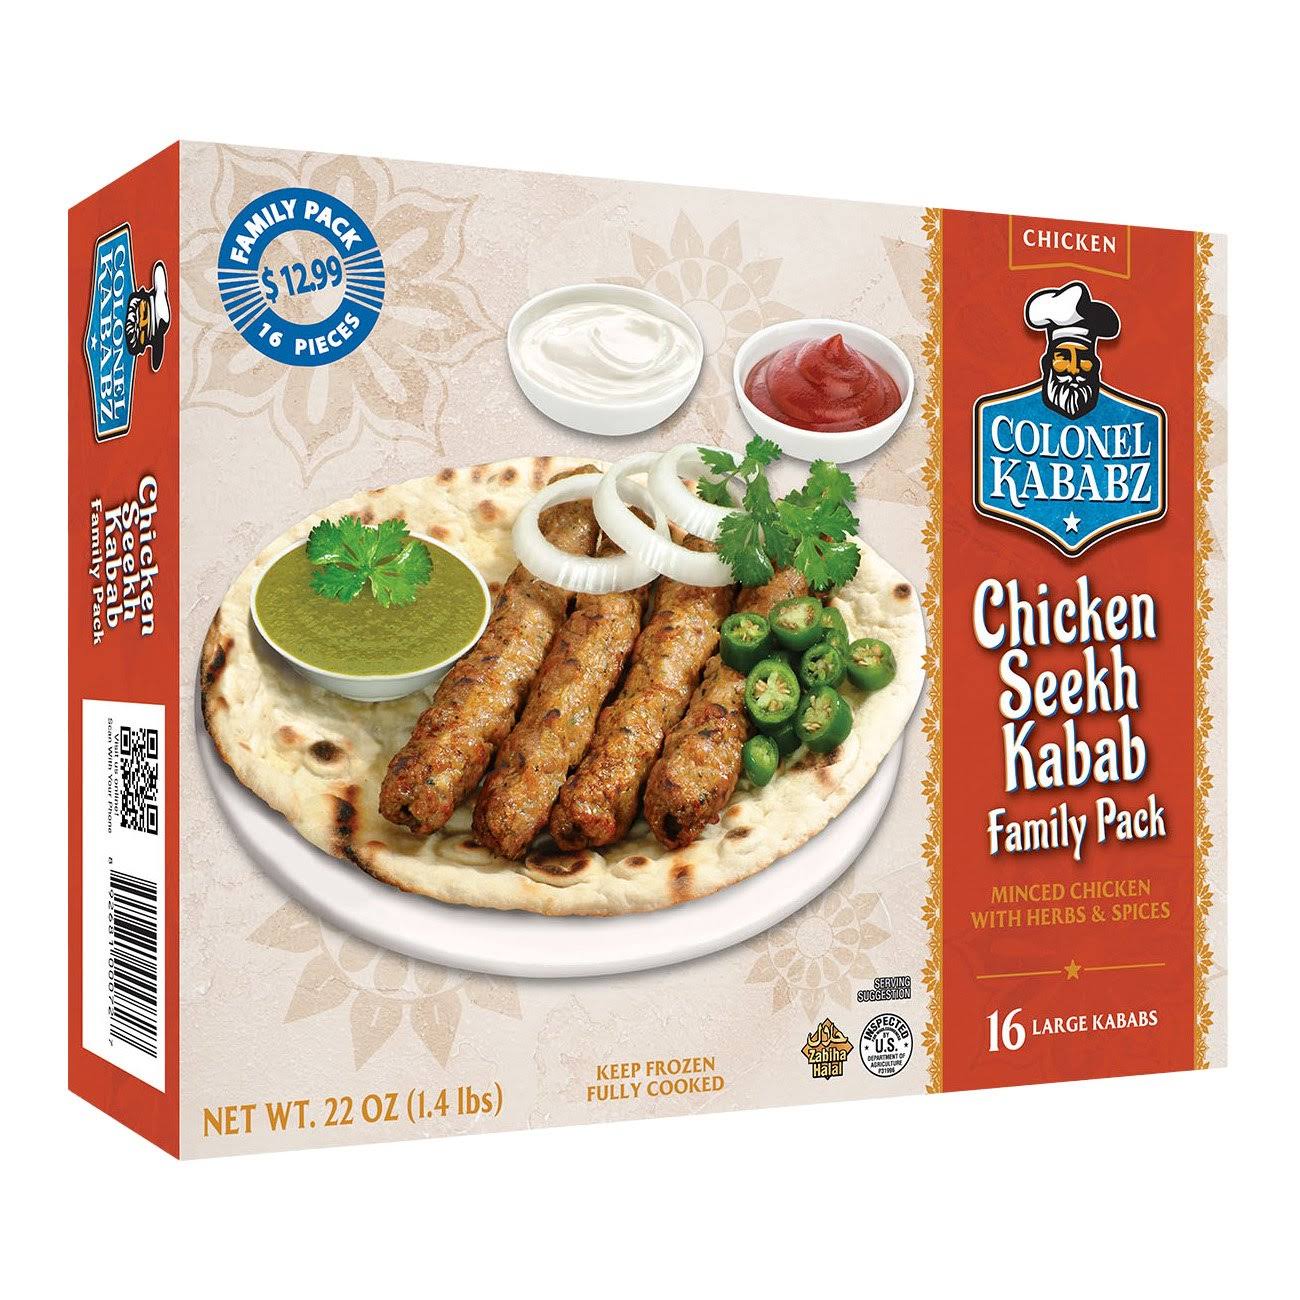 Colonel Kababz Chicken Seekh Kabab 1.4lb